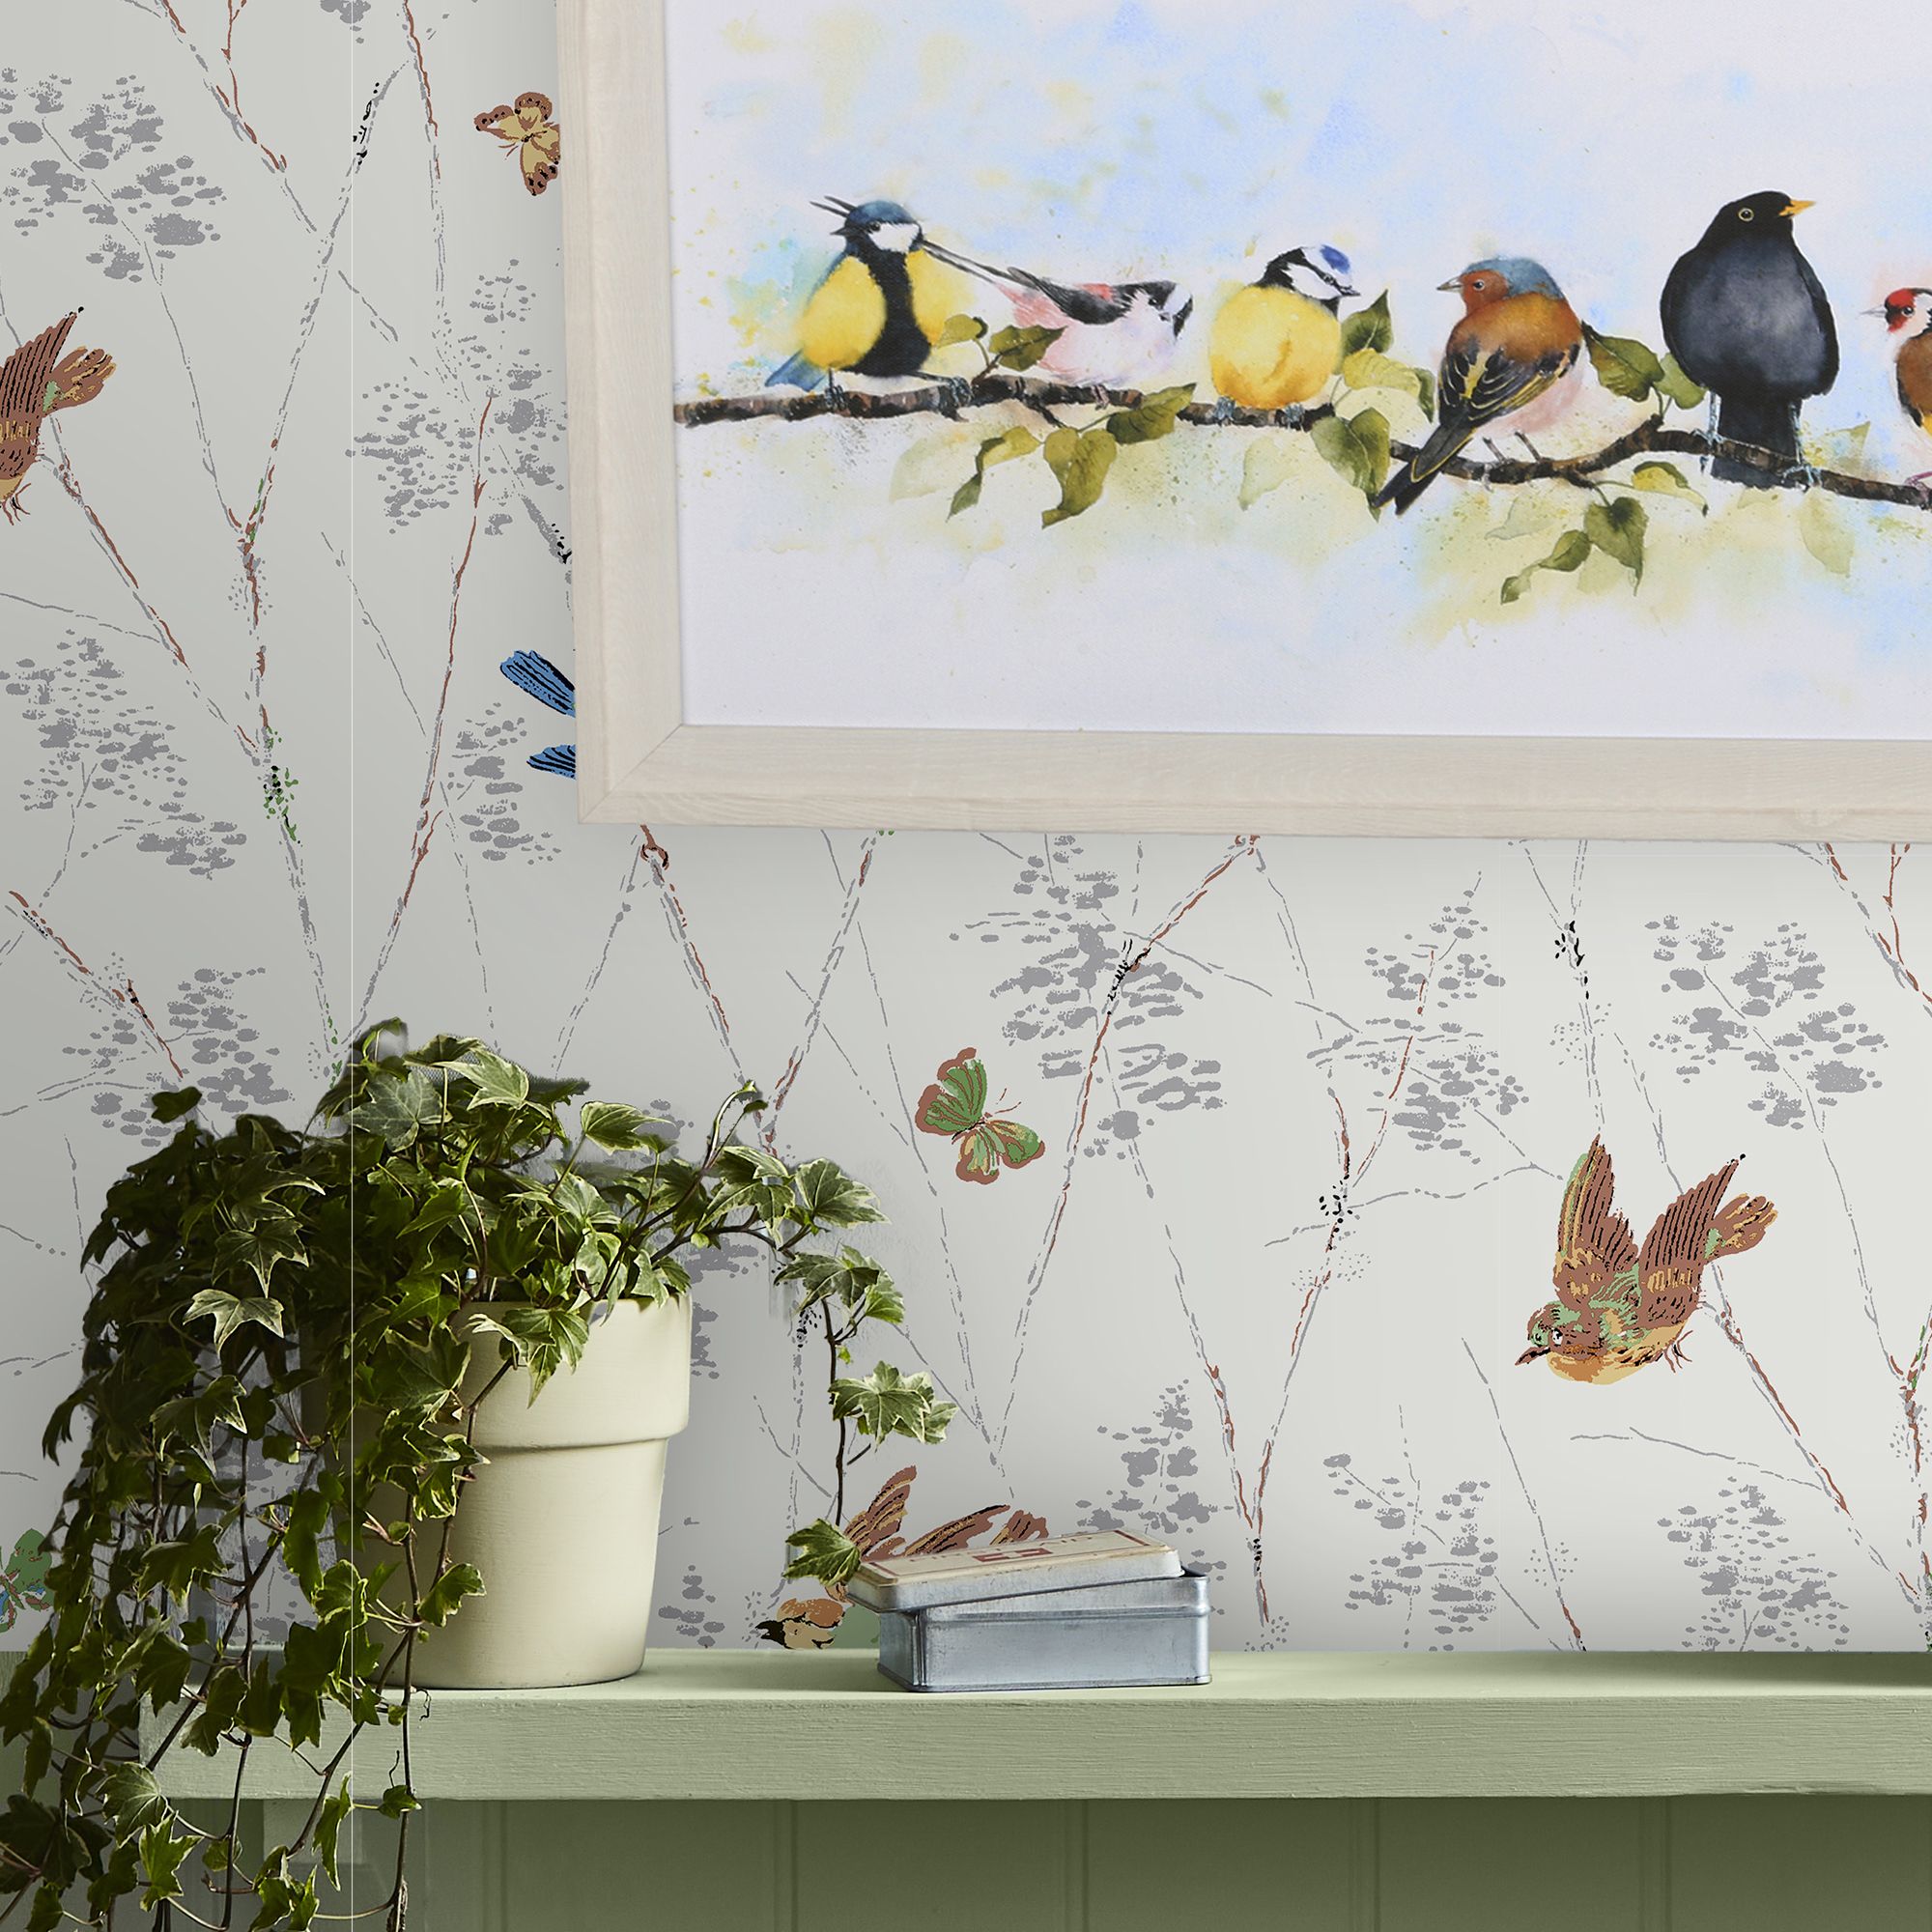 Laura Ashley Covey Birds Multicolour Canvas art (H)30cm x (W)60cm